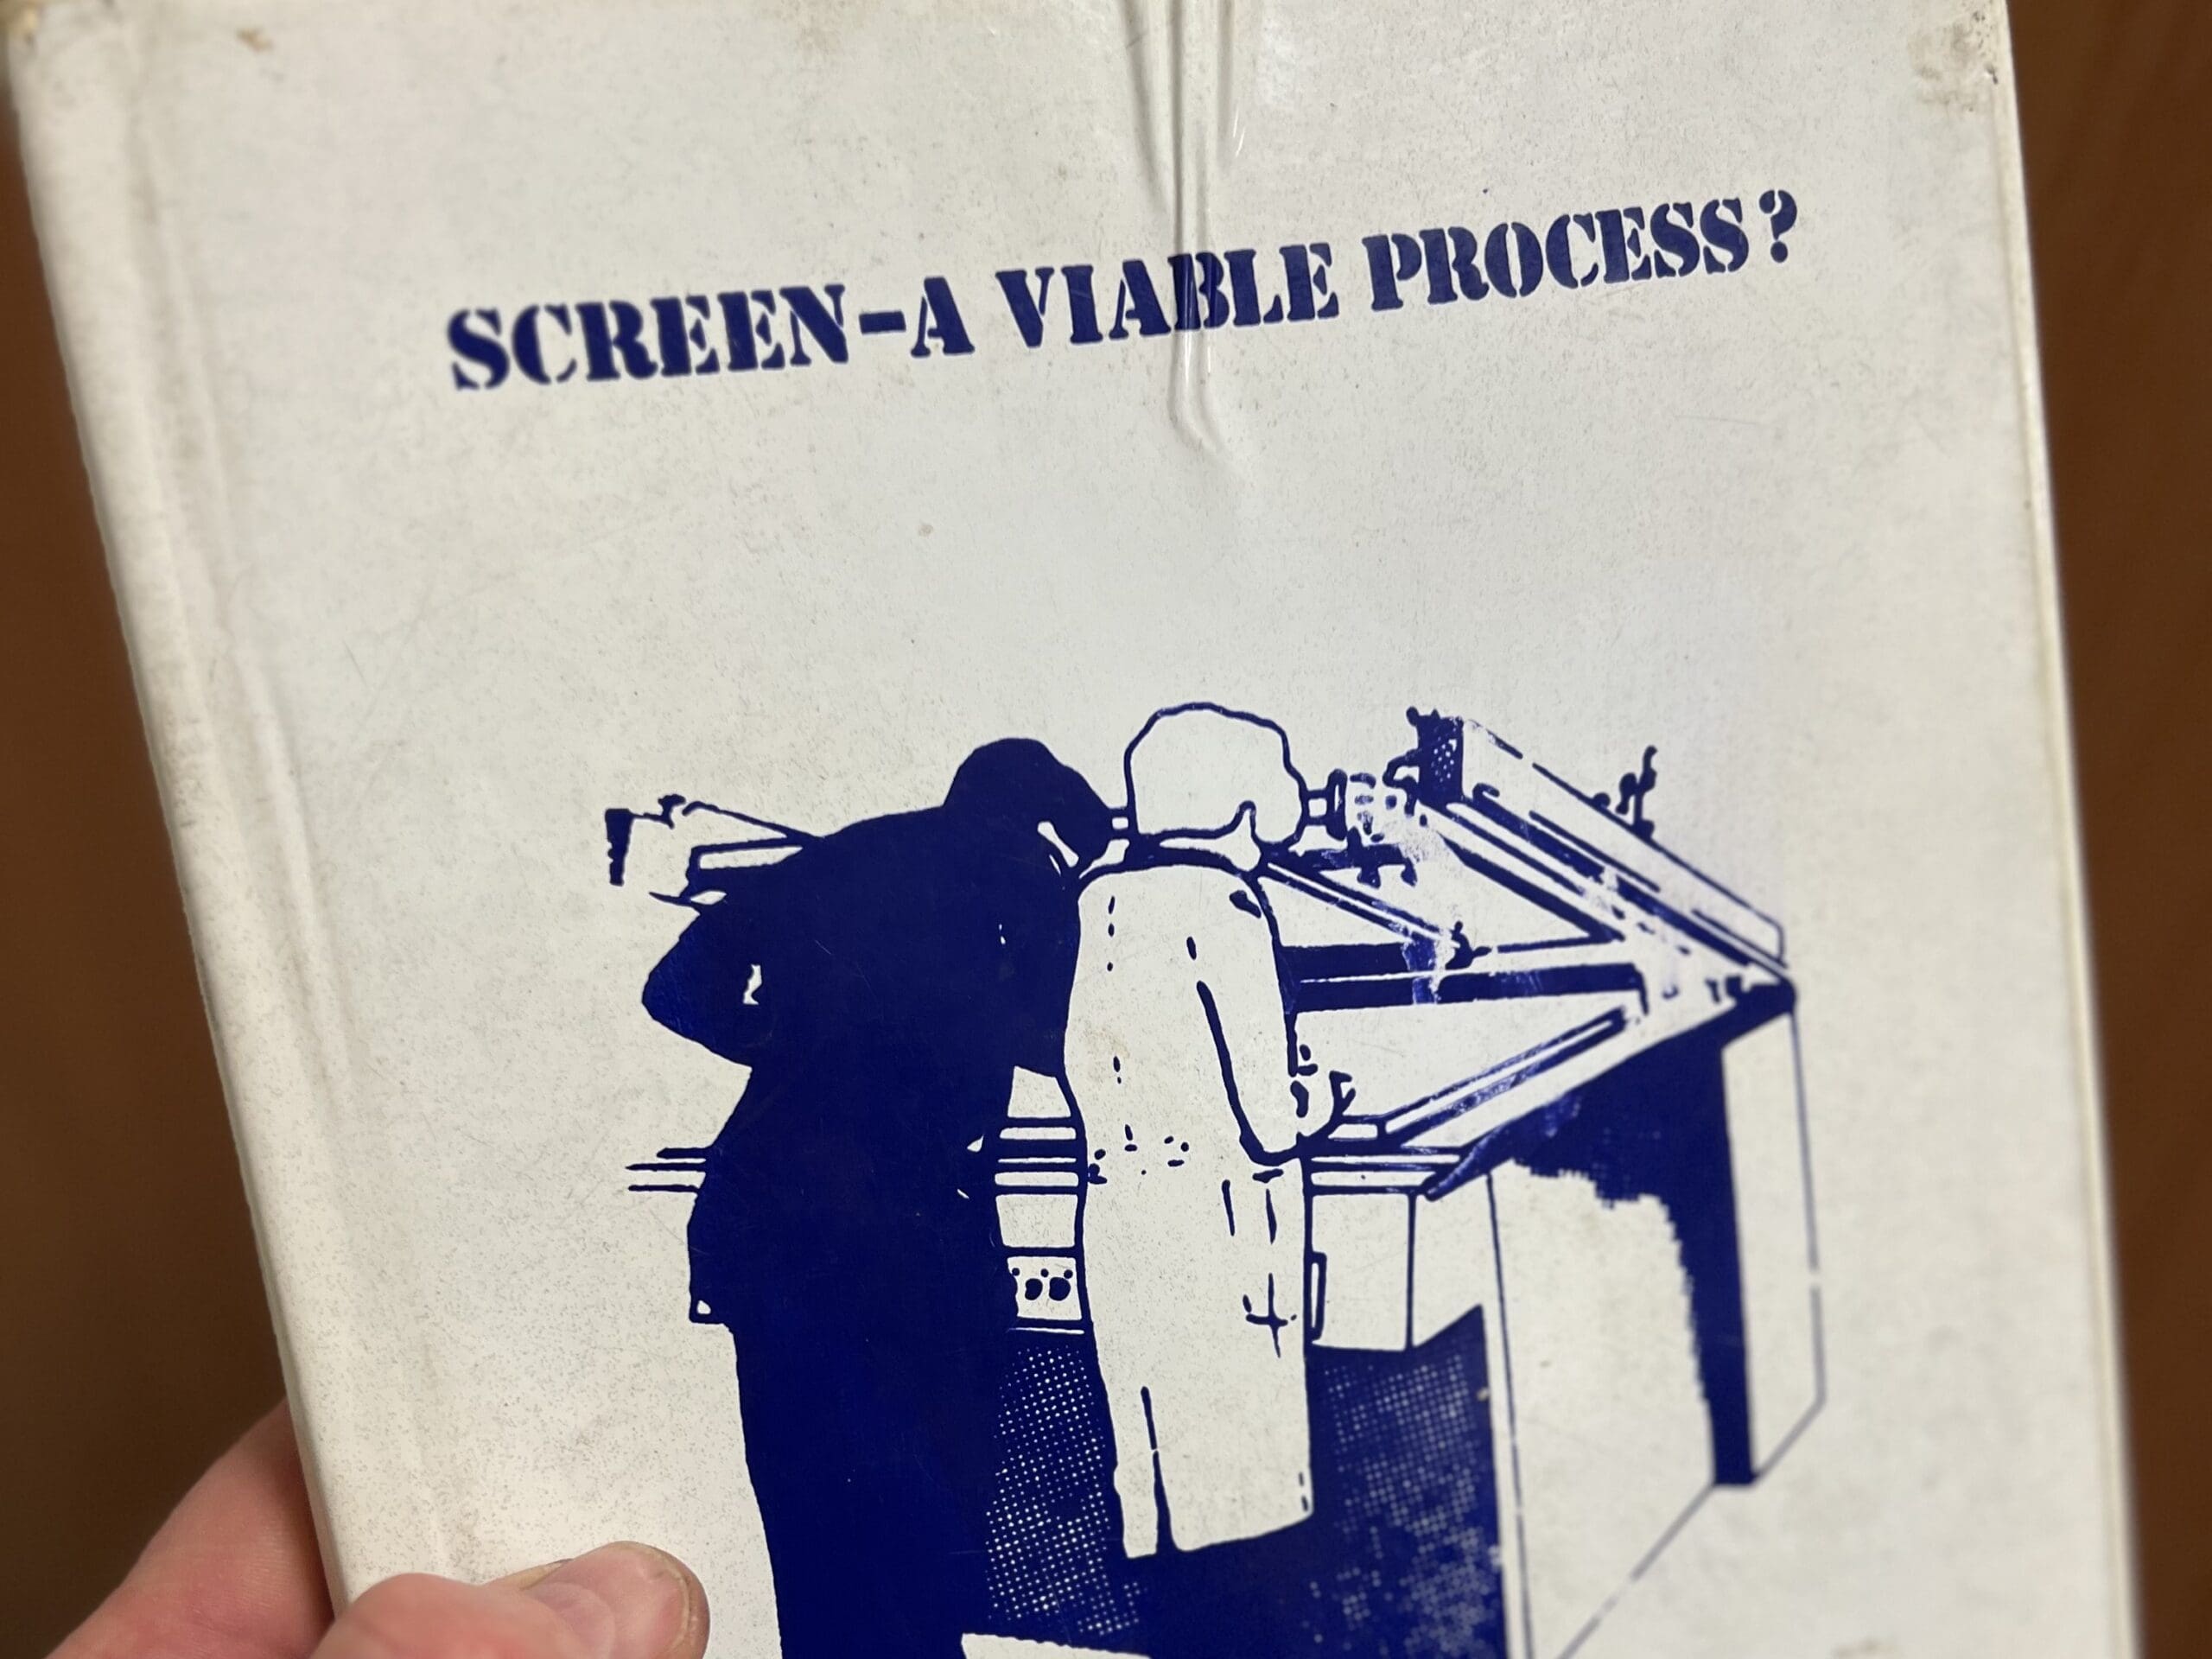 Screen – A viable process?